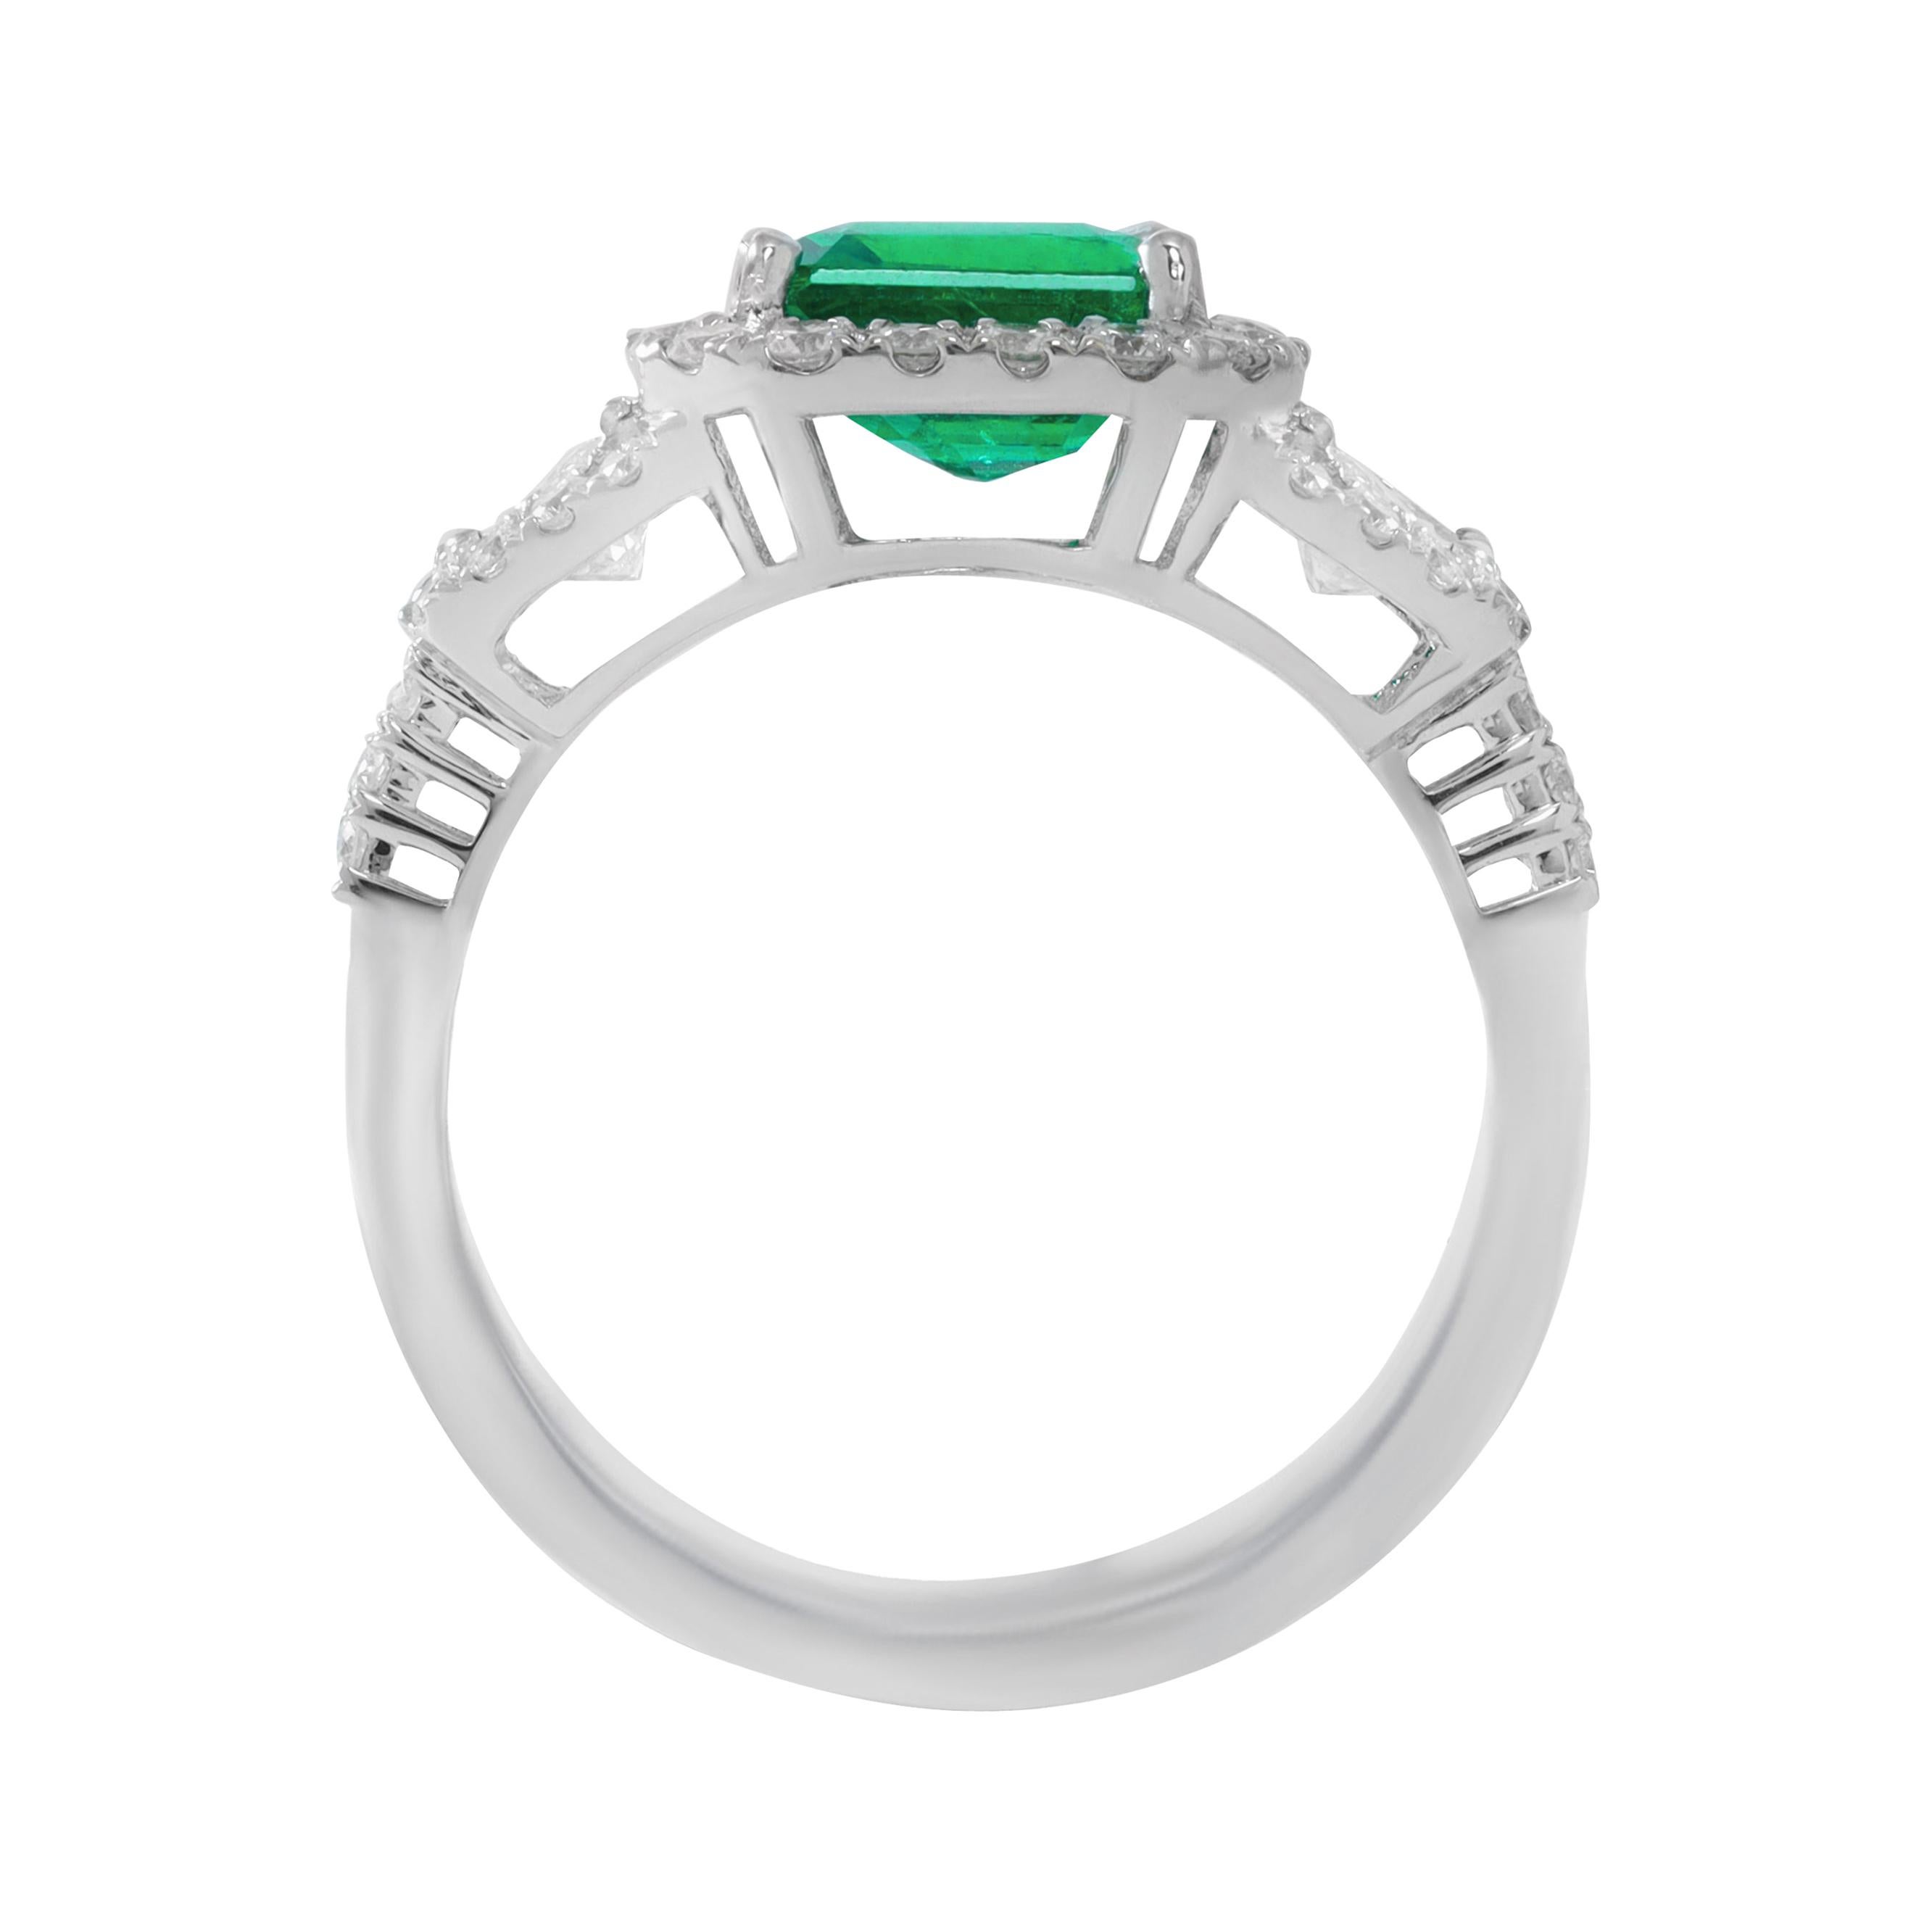 18k wg ring diamond 0.59ct trp diamond 0.50ct, emerald 2.15ct, 4.09gm 53st
